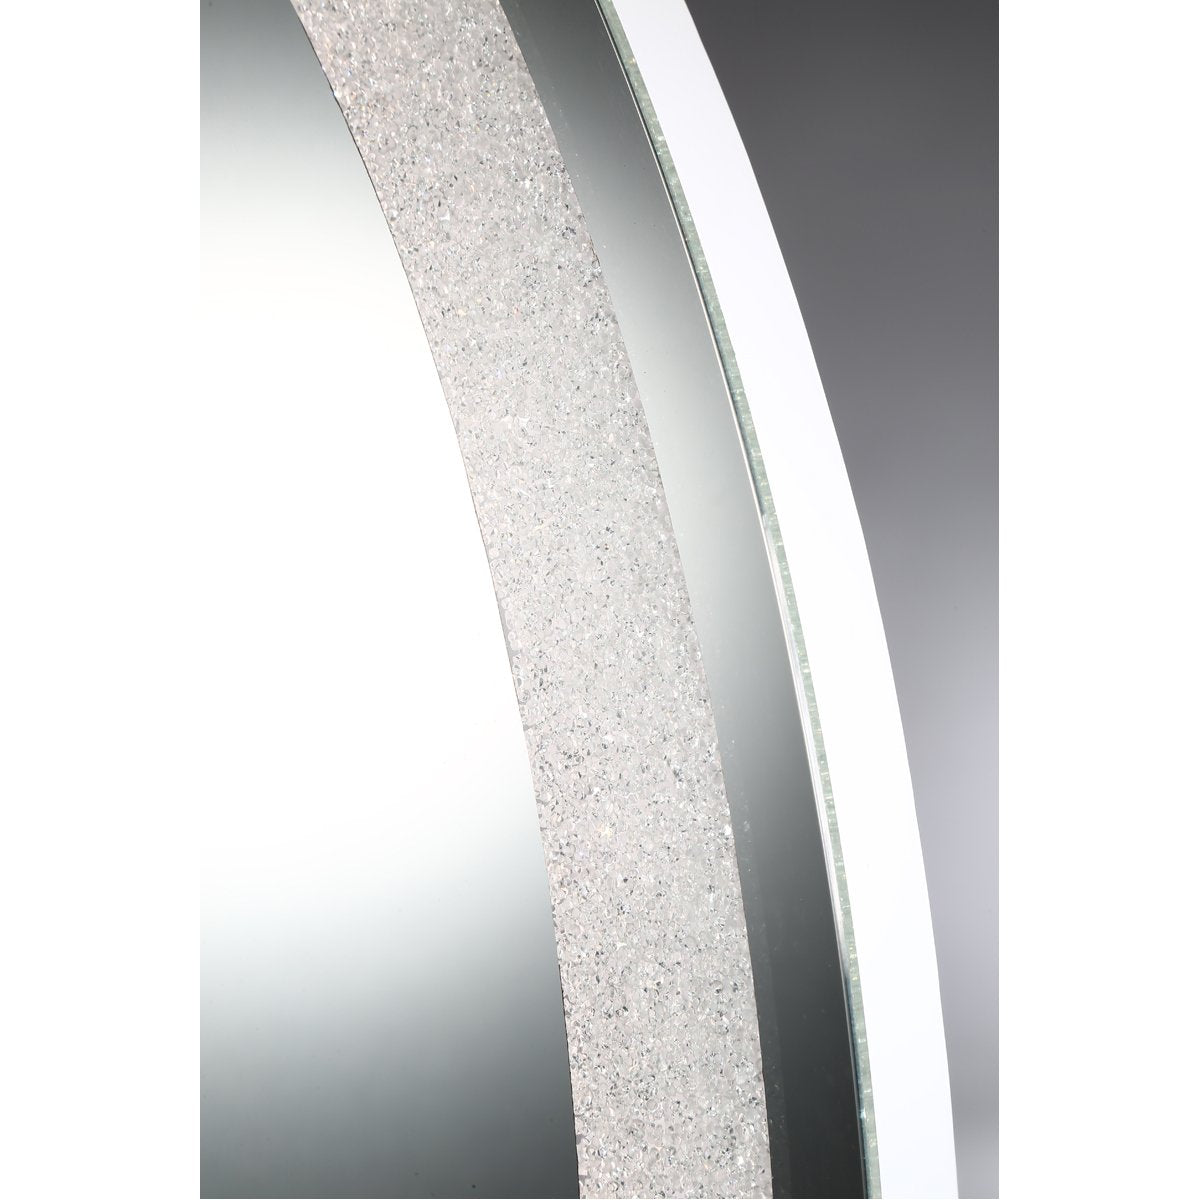 Eurofase Back-lit LED Oval Crystal Mirror